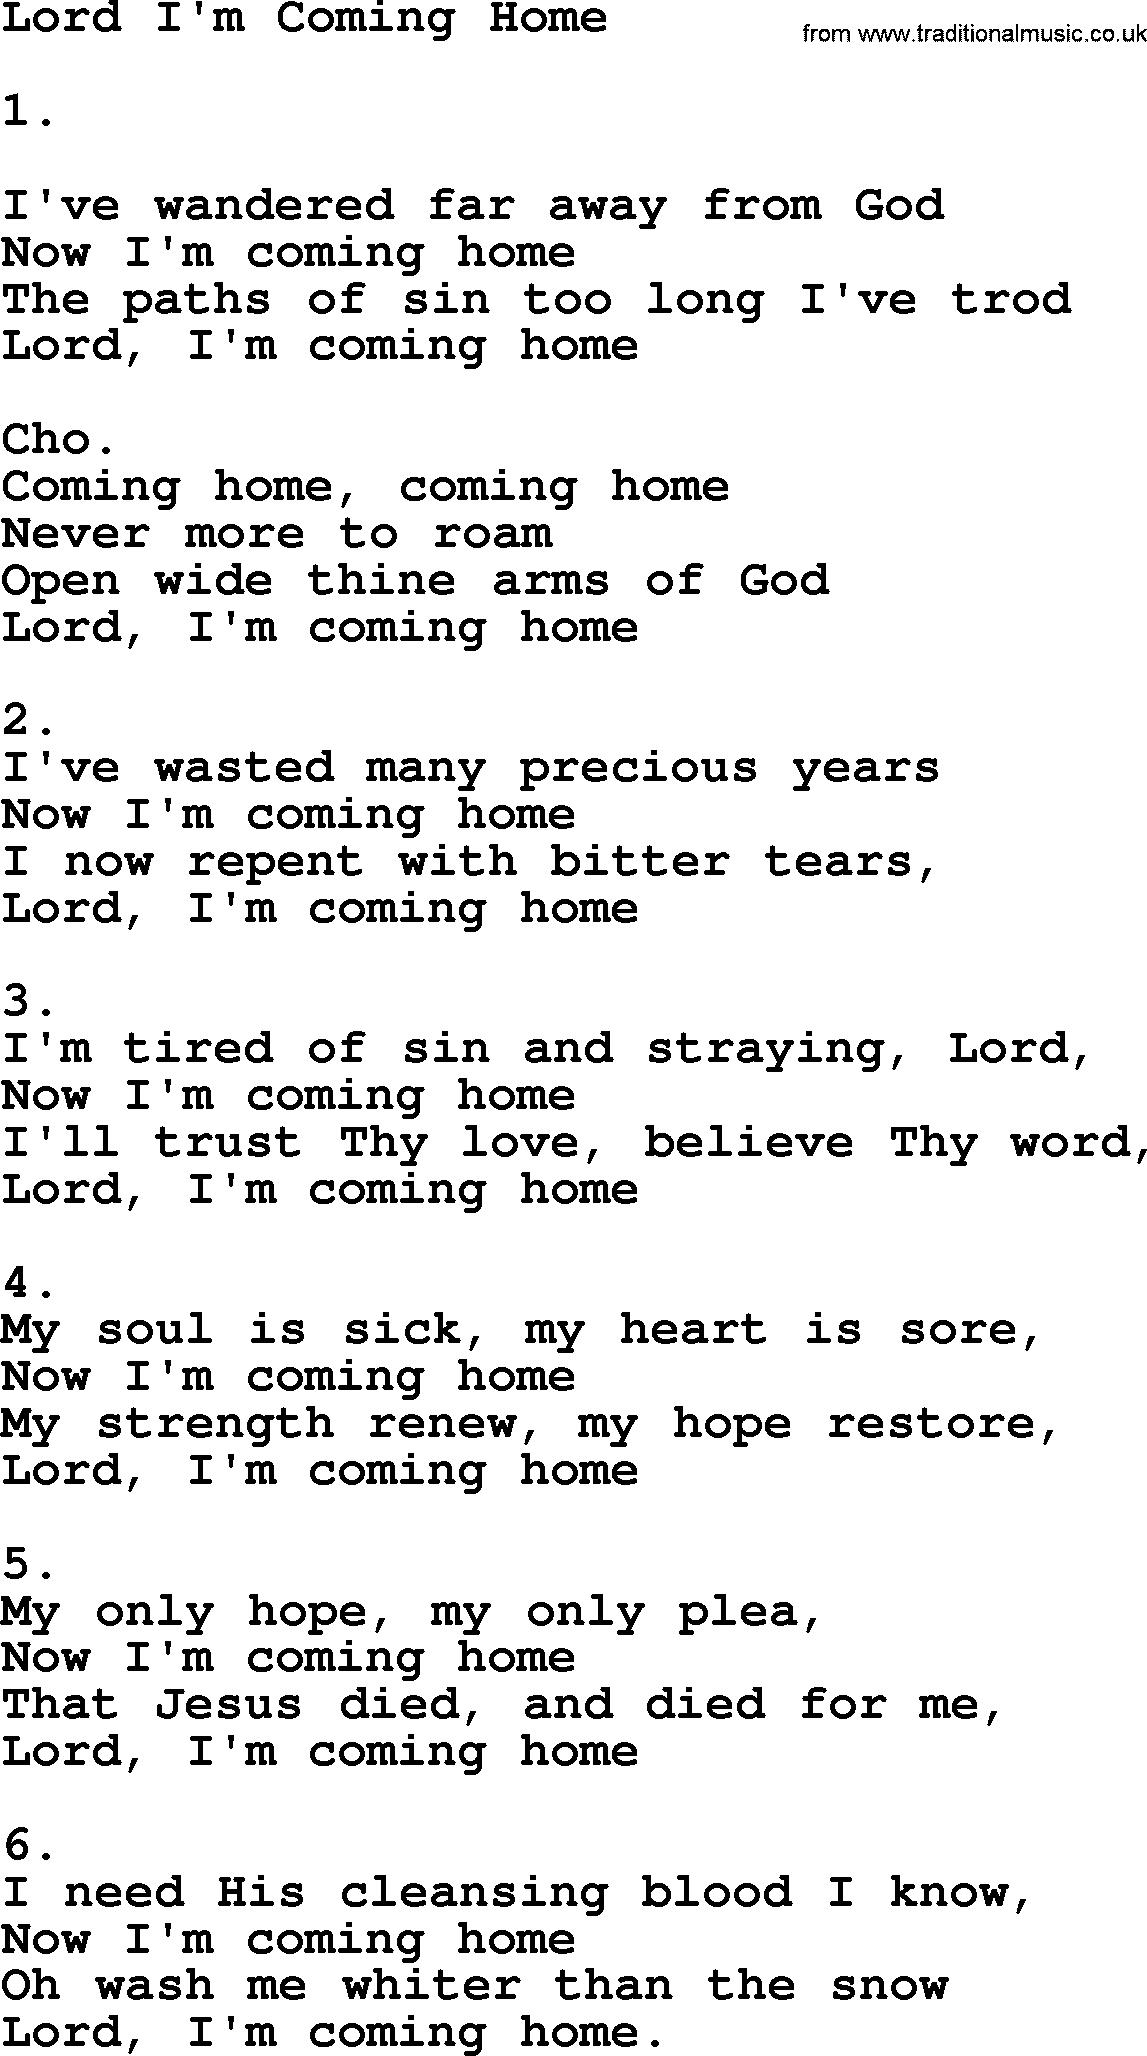 Apostolic & Pentecostal Hymns and Songs, Hymn: Lord I'm Coming Home lyrics and PDF